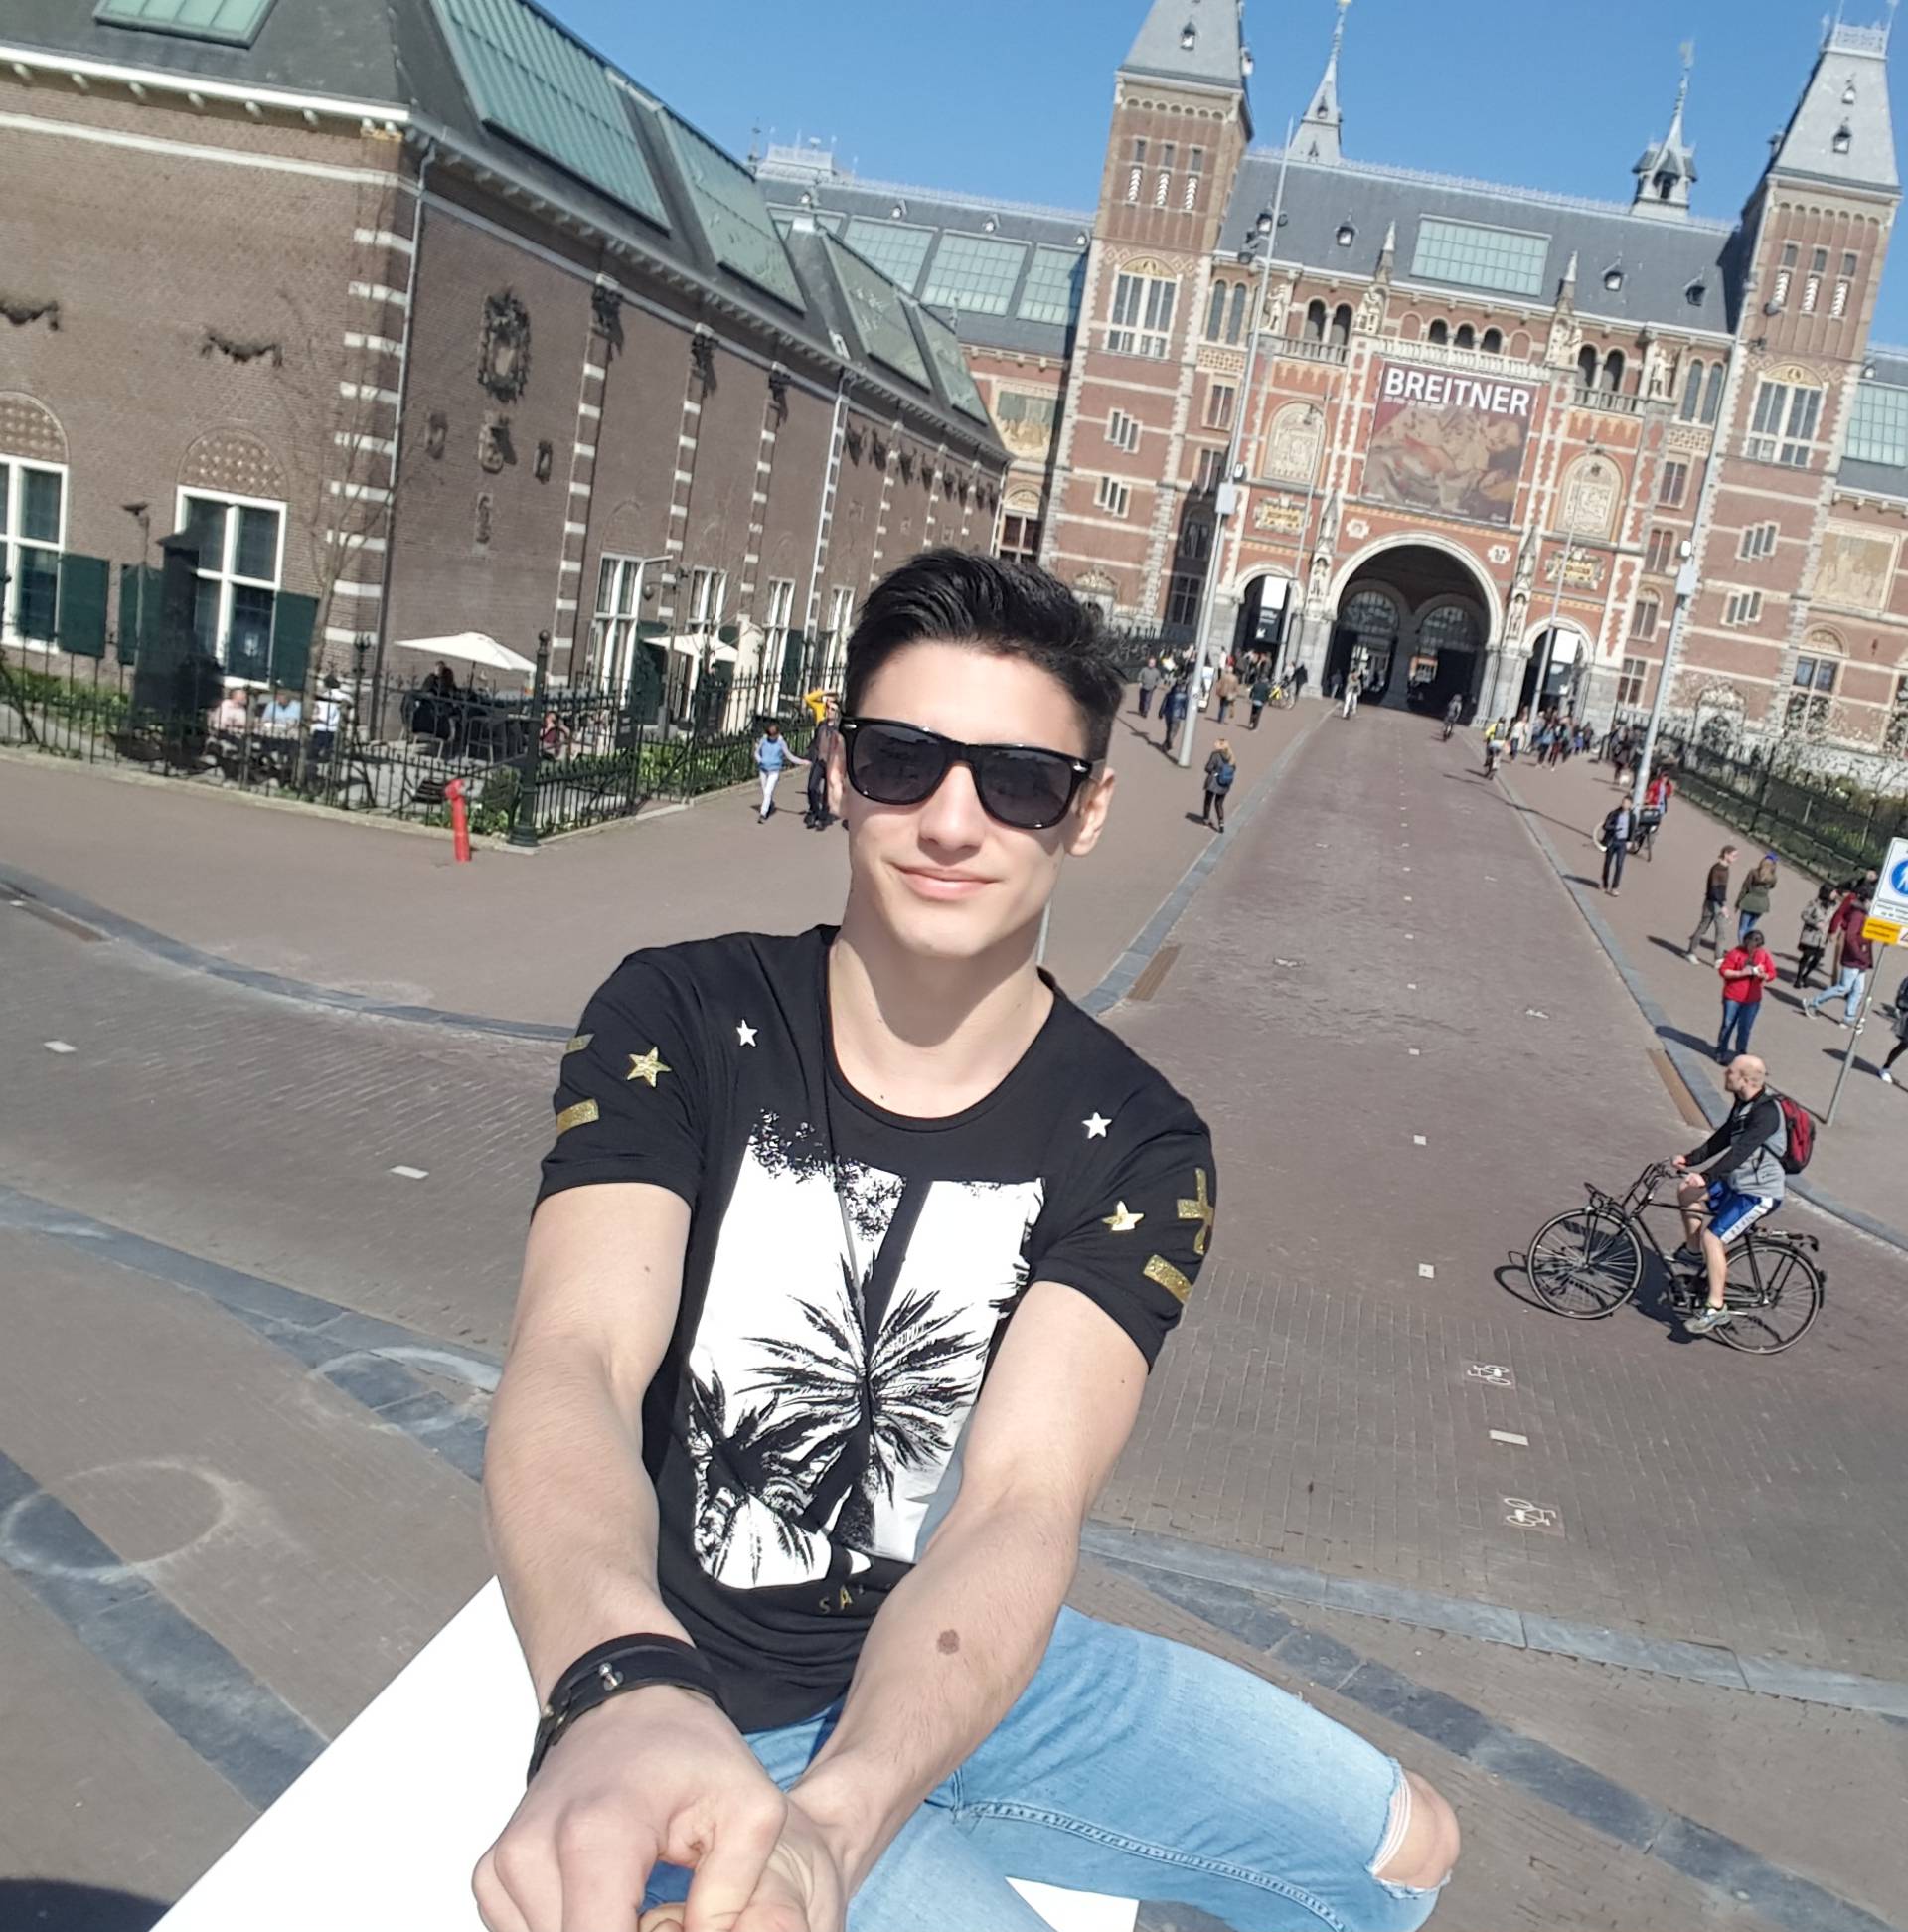 Endi odlučio mobitelom snimiti spot na ulicama  Amsterdama